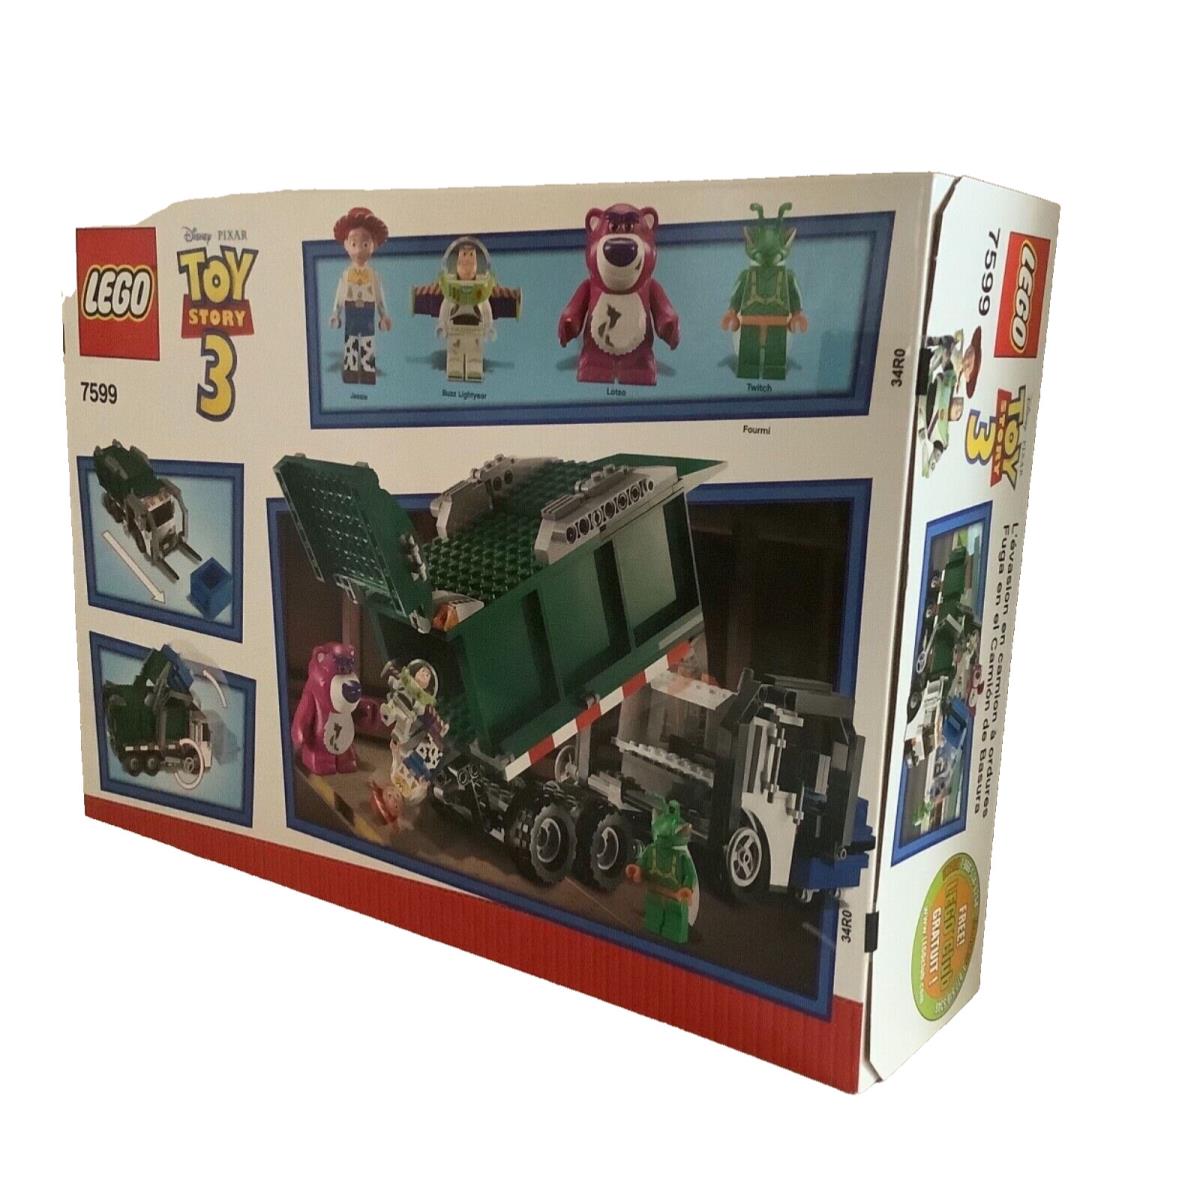 Lego Toy Story: Garbage Truck Getaway 7599